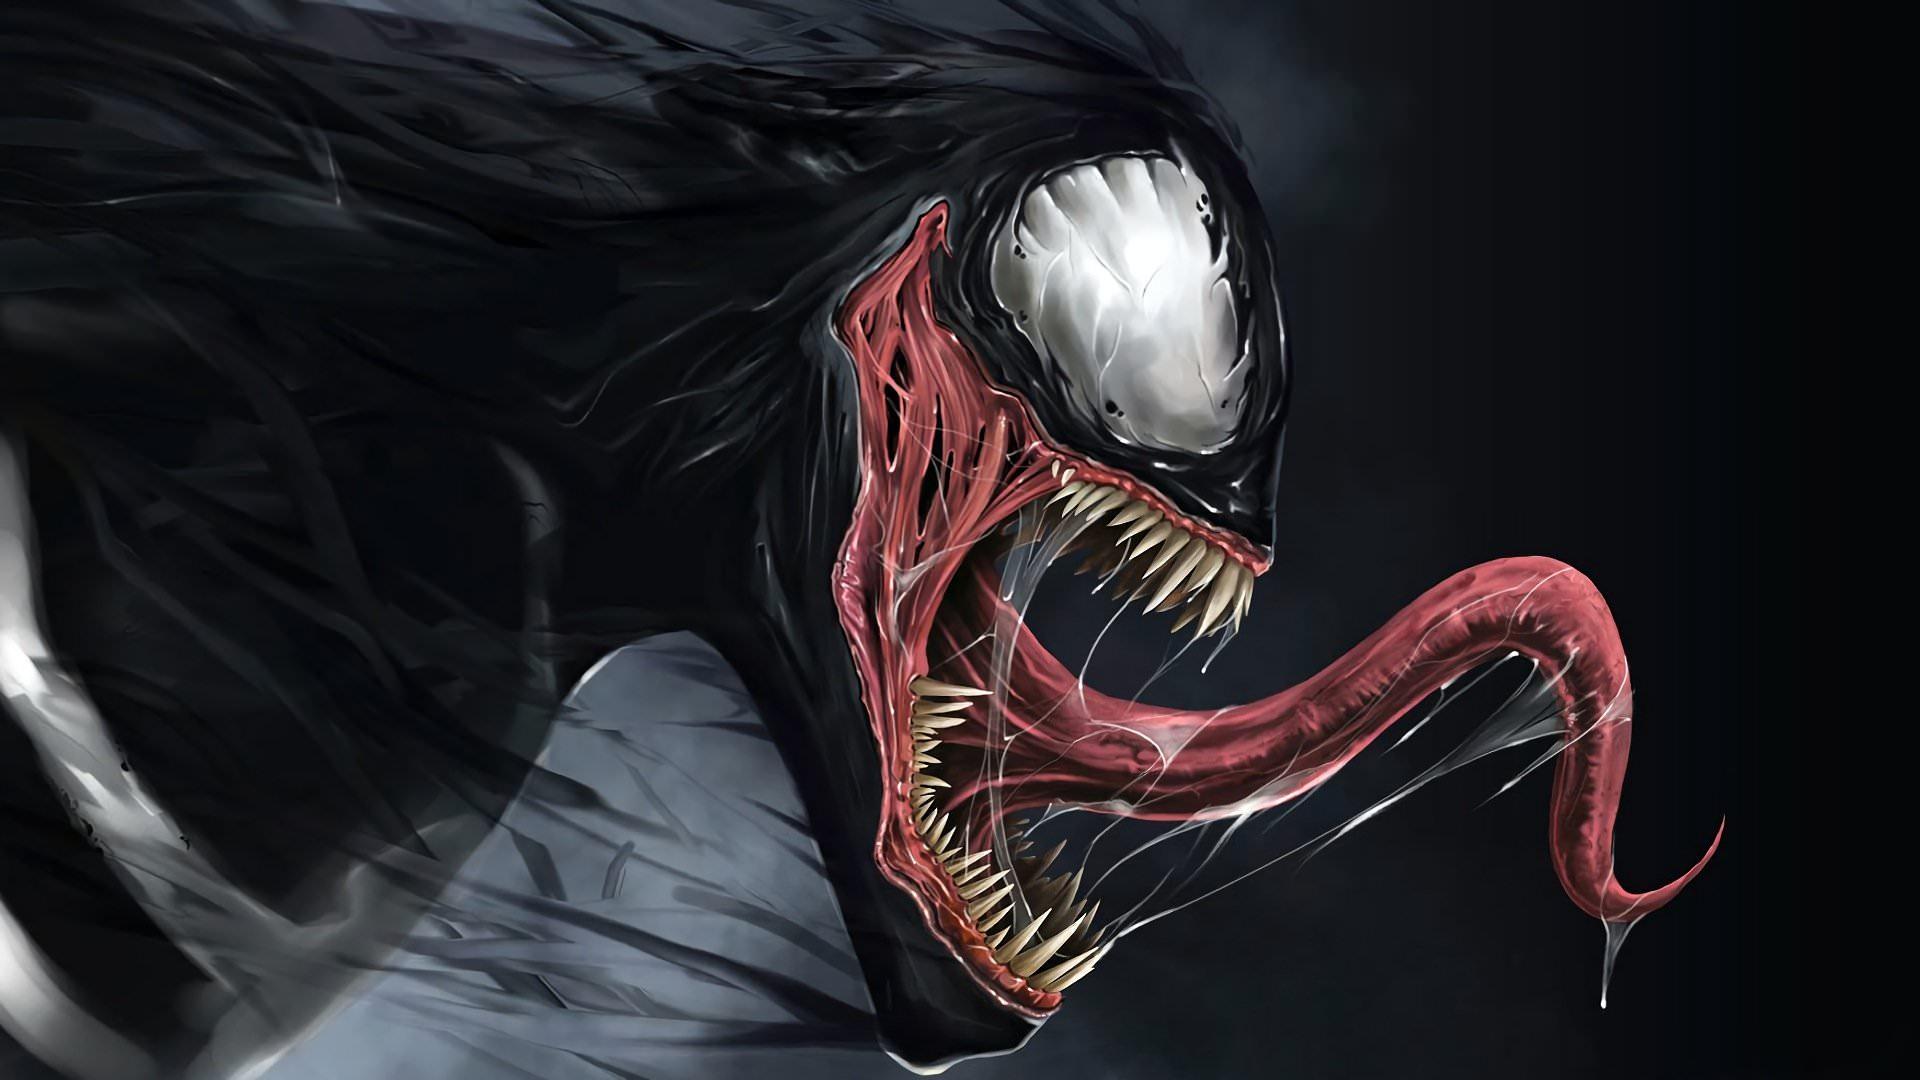 Venom wallpaper HD for desktop background